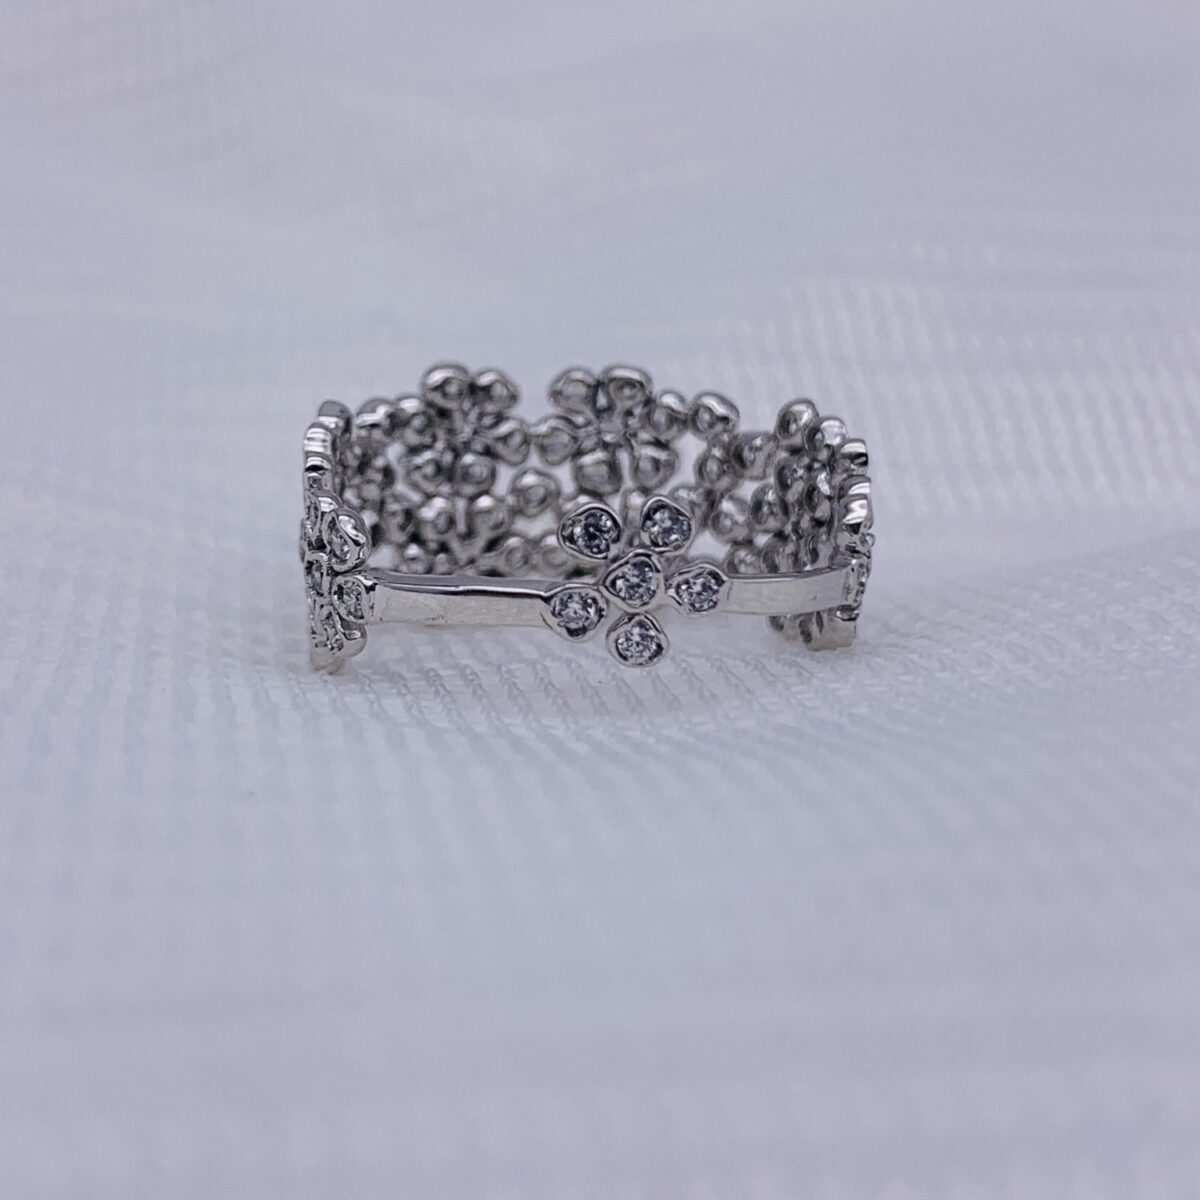 Edwardian style round cut lab grown diamond ring